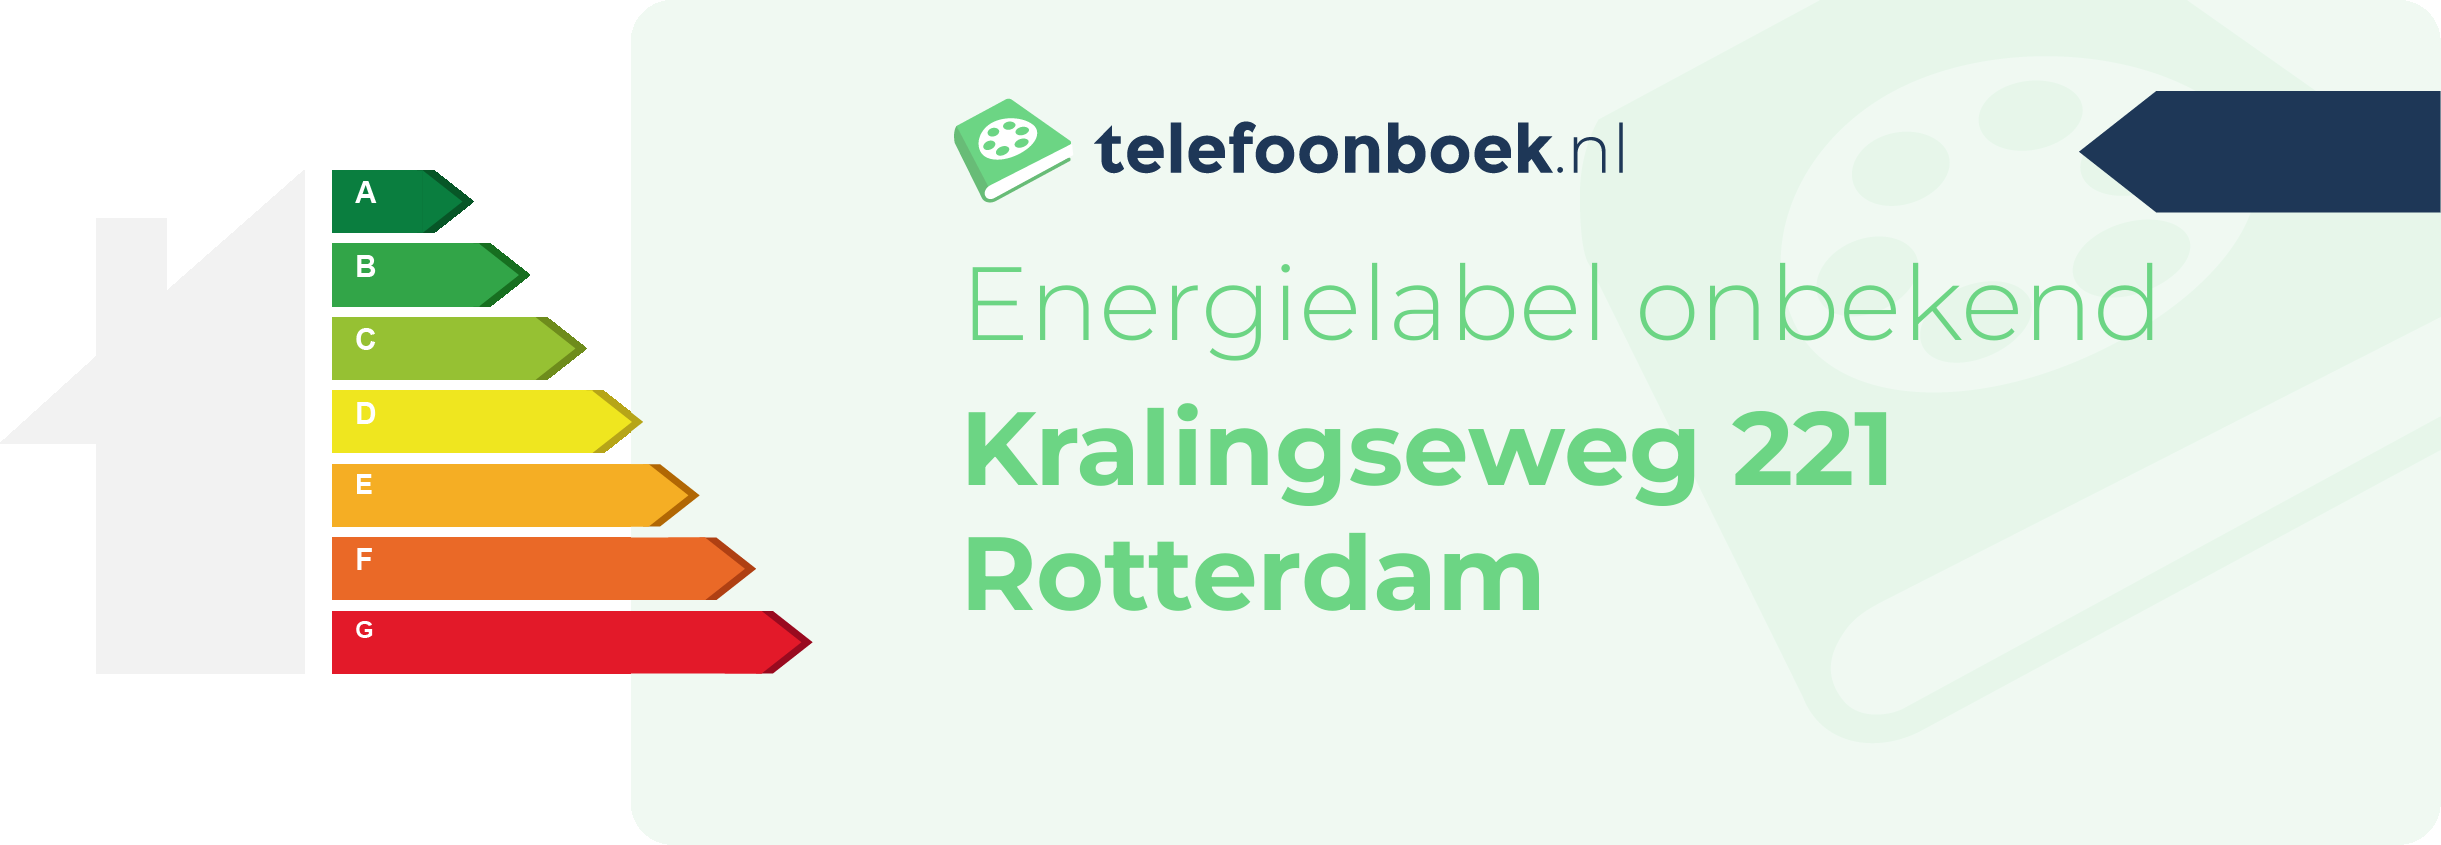 Energielabel Kralingseweg 221 Rotterdam